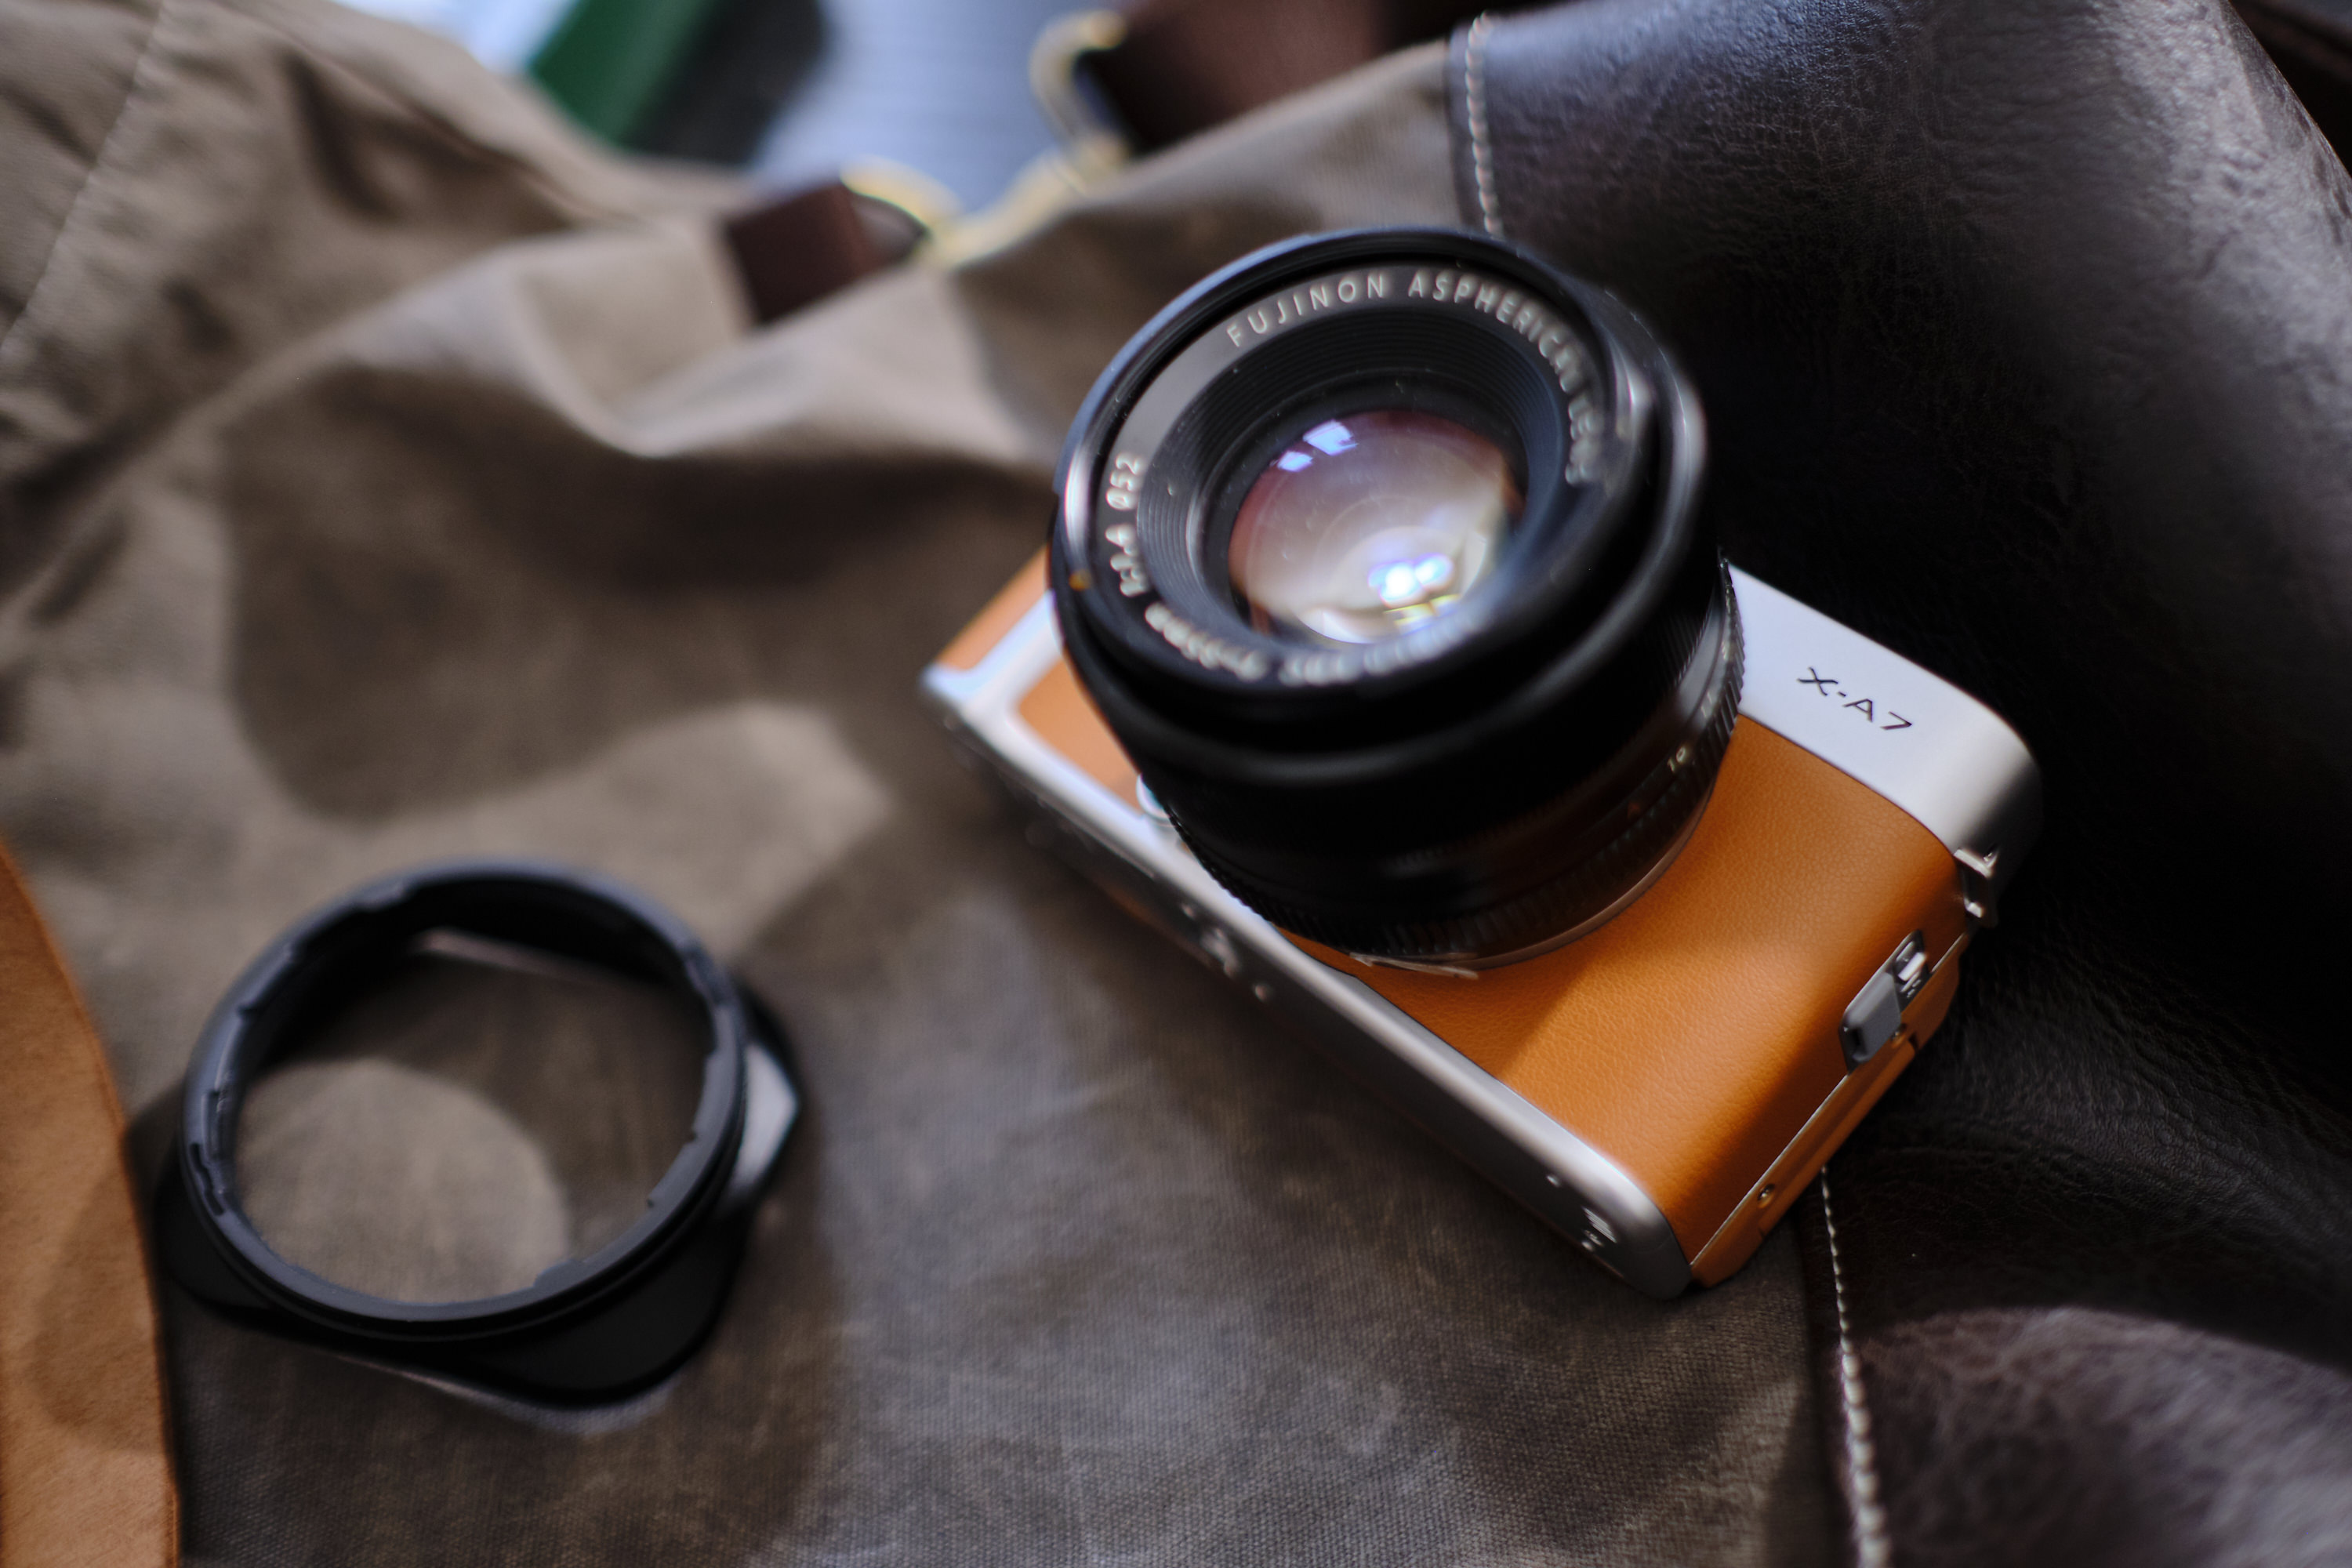 First Impressions: Fujifilm X-A7 (A Curiously Beautiful Camera)